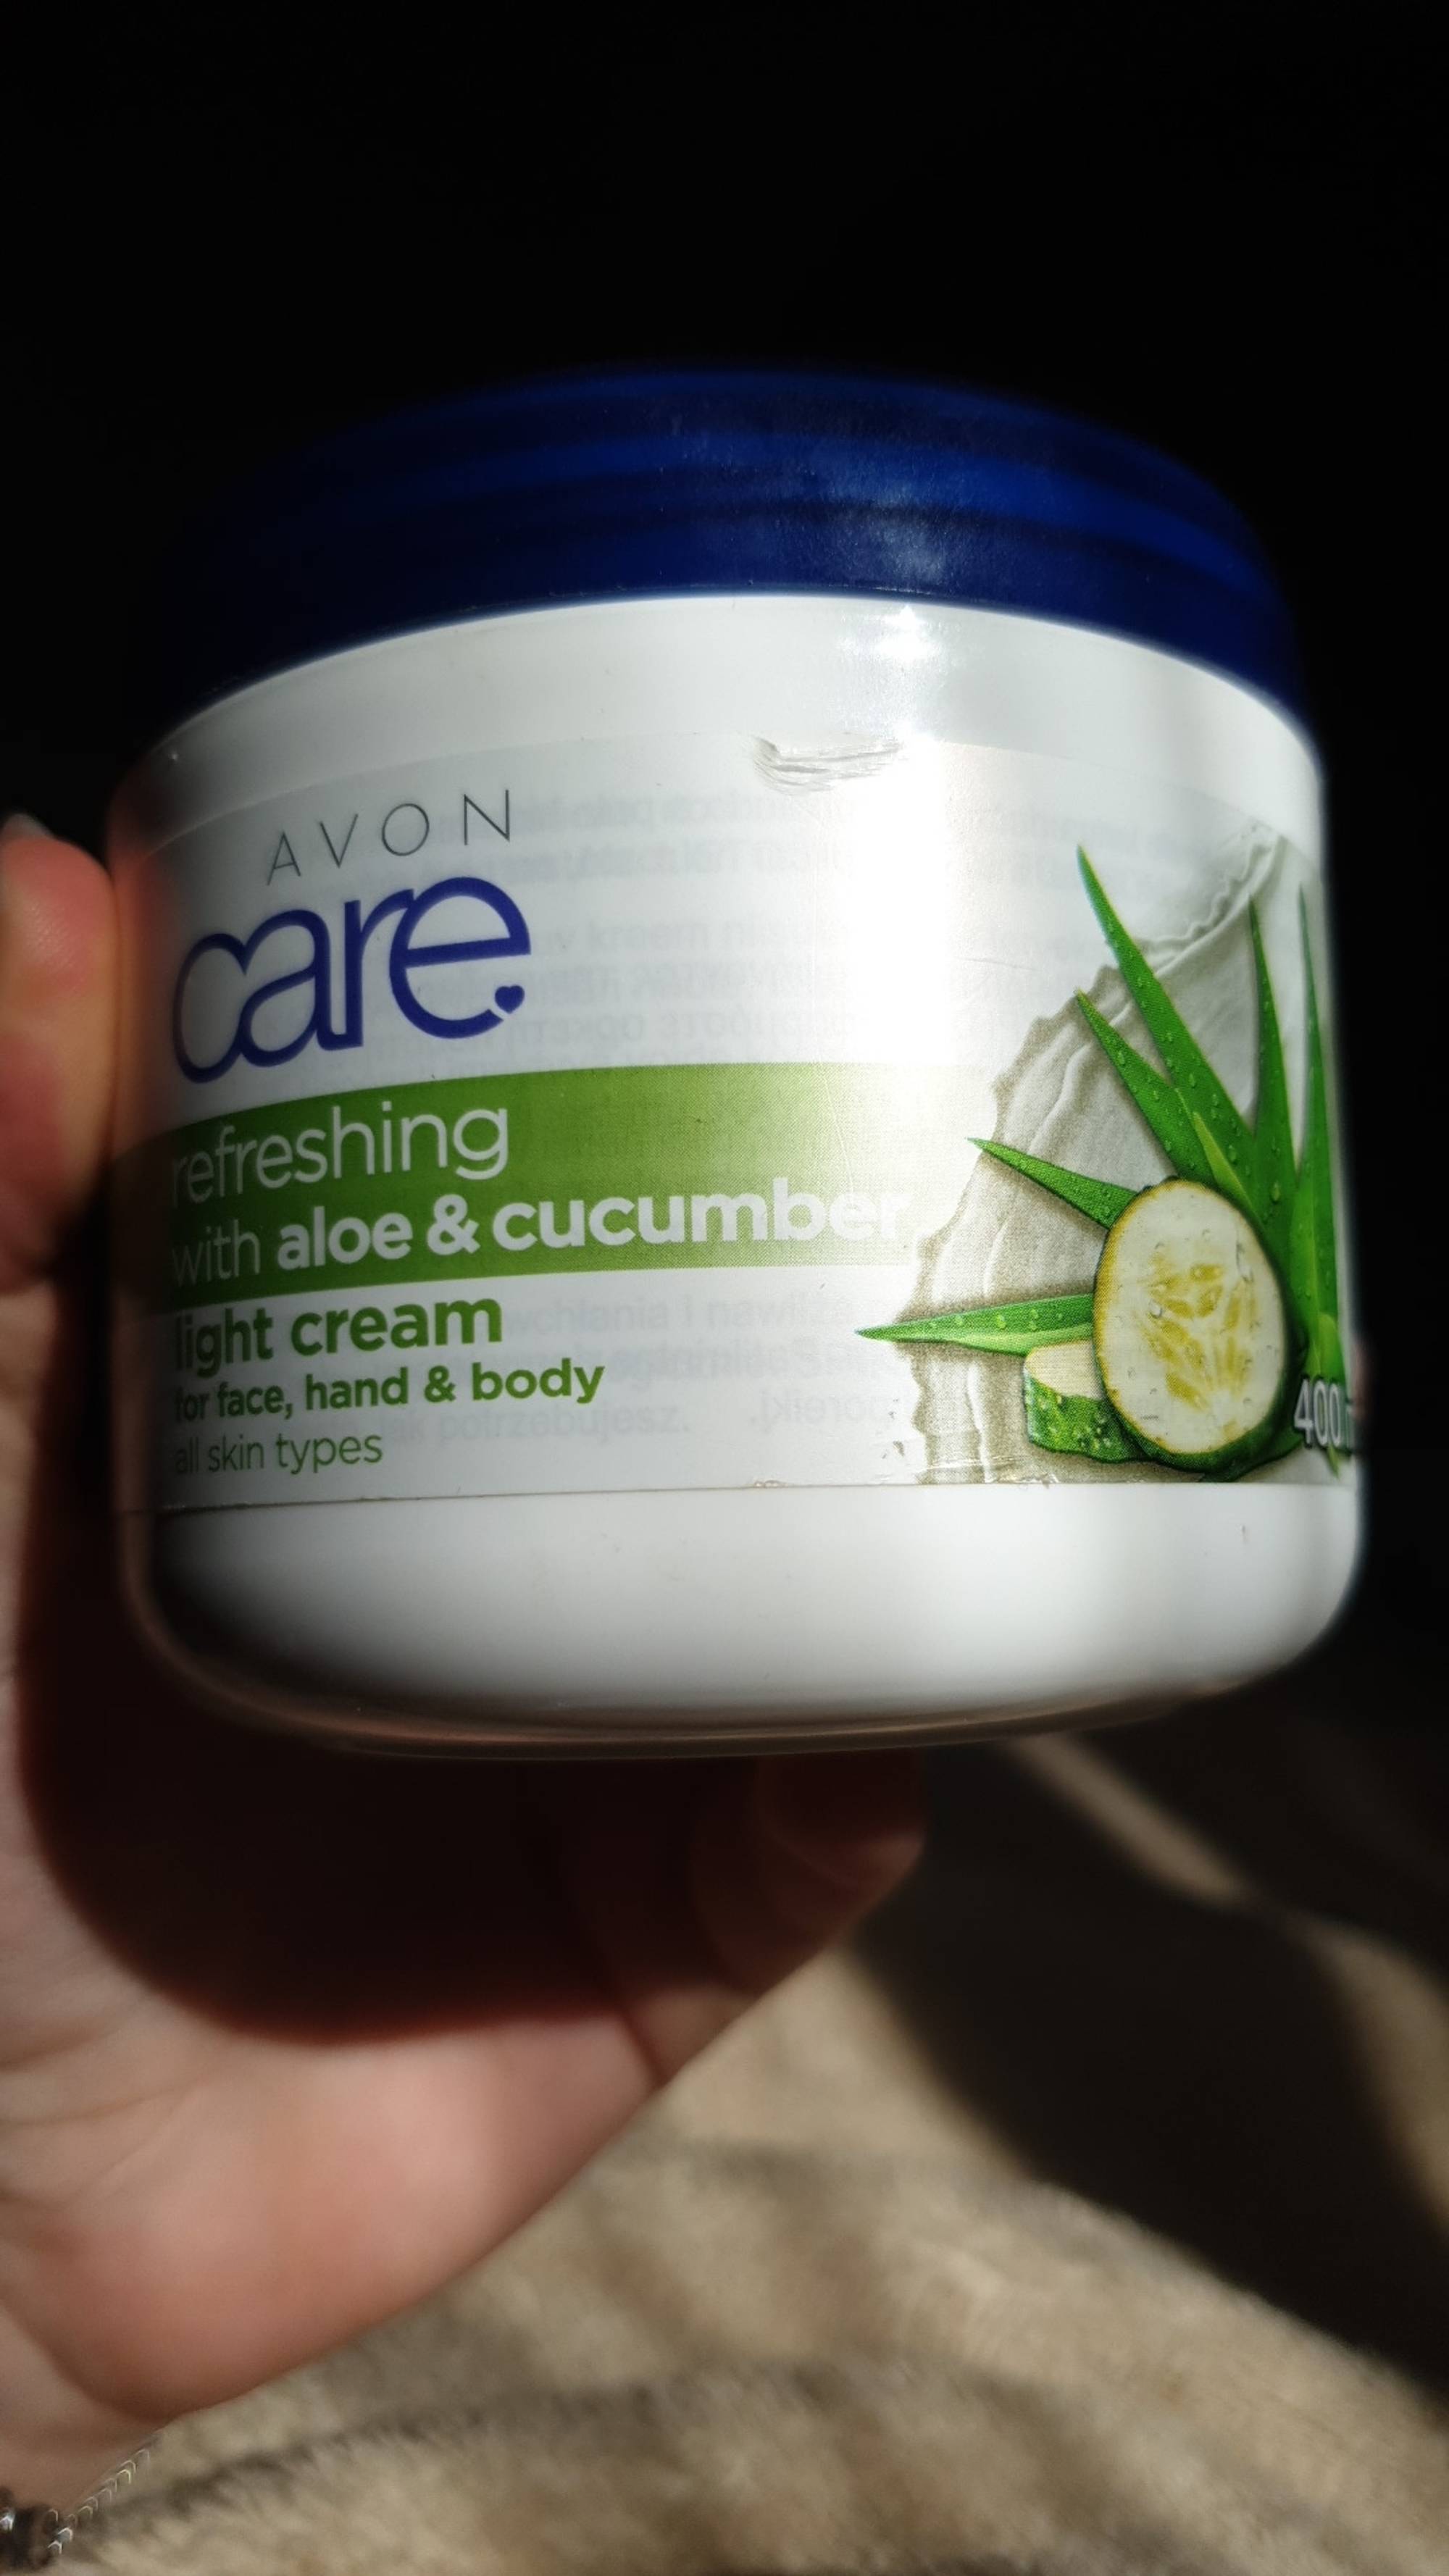 AVON CARE - Refreshing with aloe & cucumber - Light cream